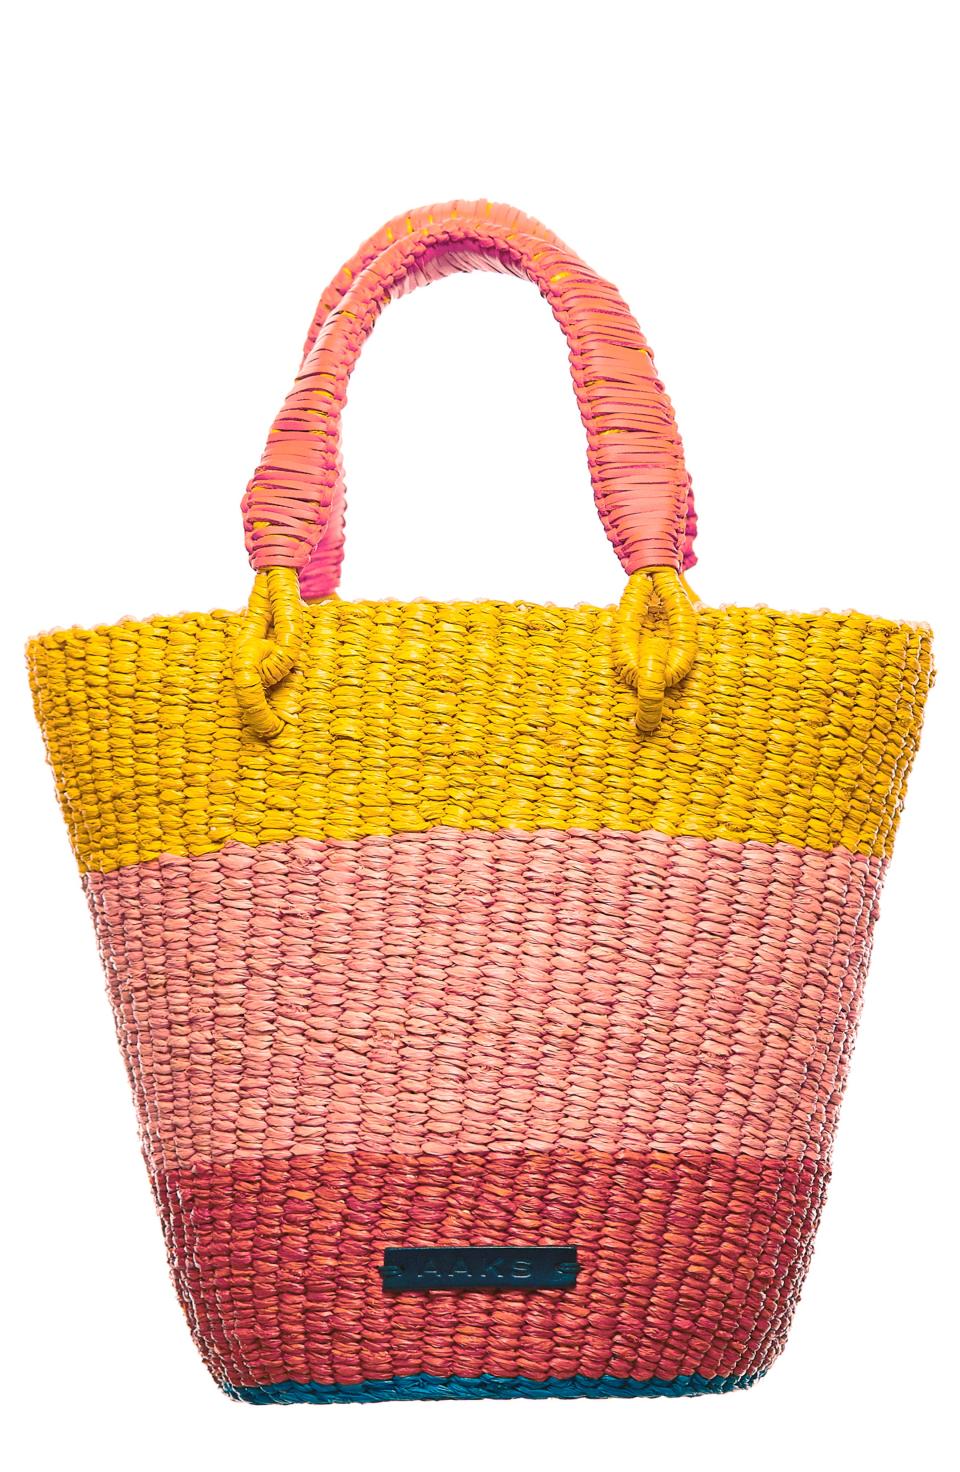 18) A A K S AAKS Tia Raffia Bucket Bag in Yellow/Pale Pink/Dark Orange at Nordstrom